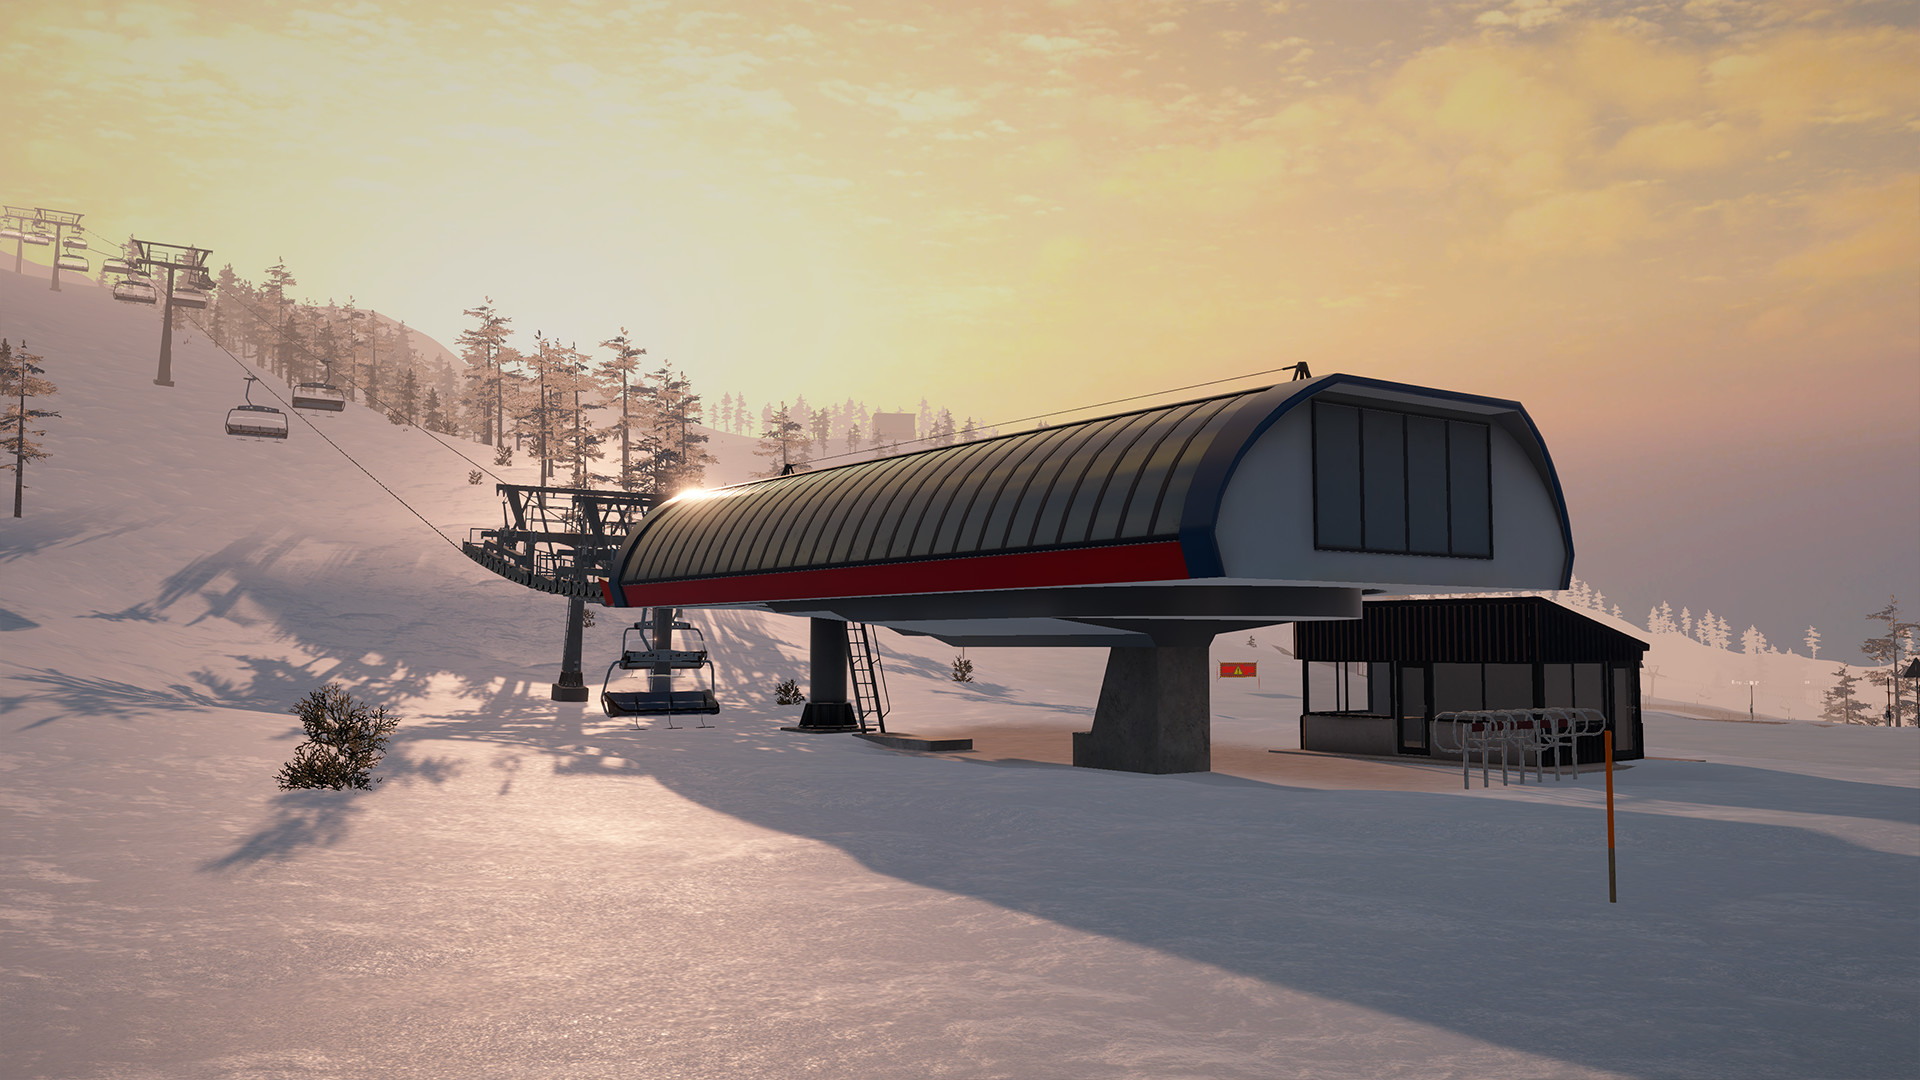 Alpine - The Simulation Game - screenshot 12